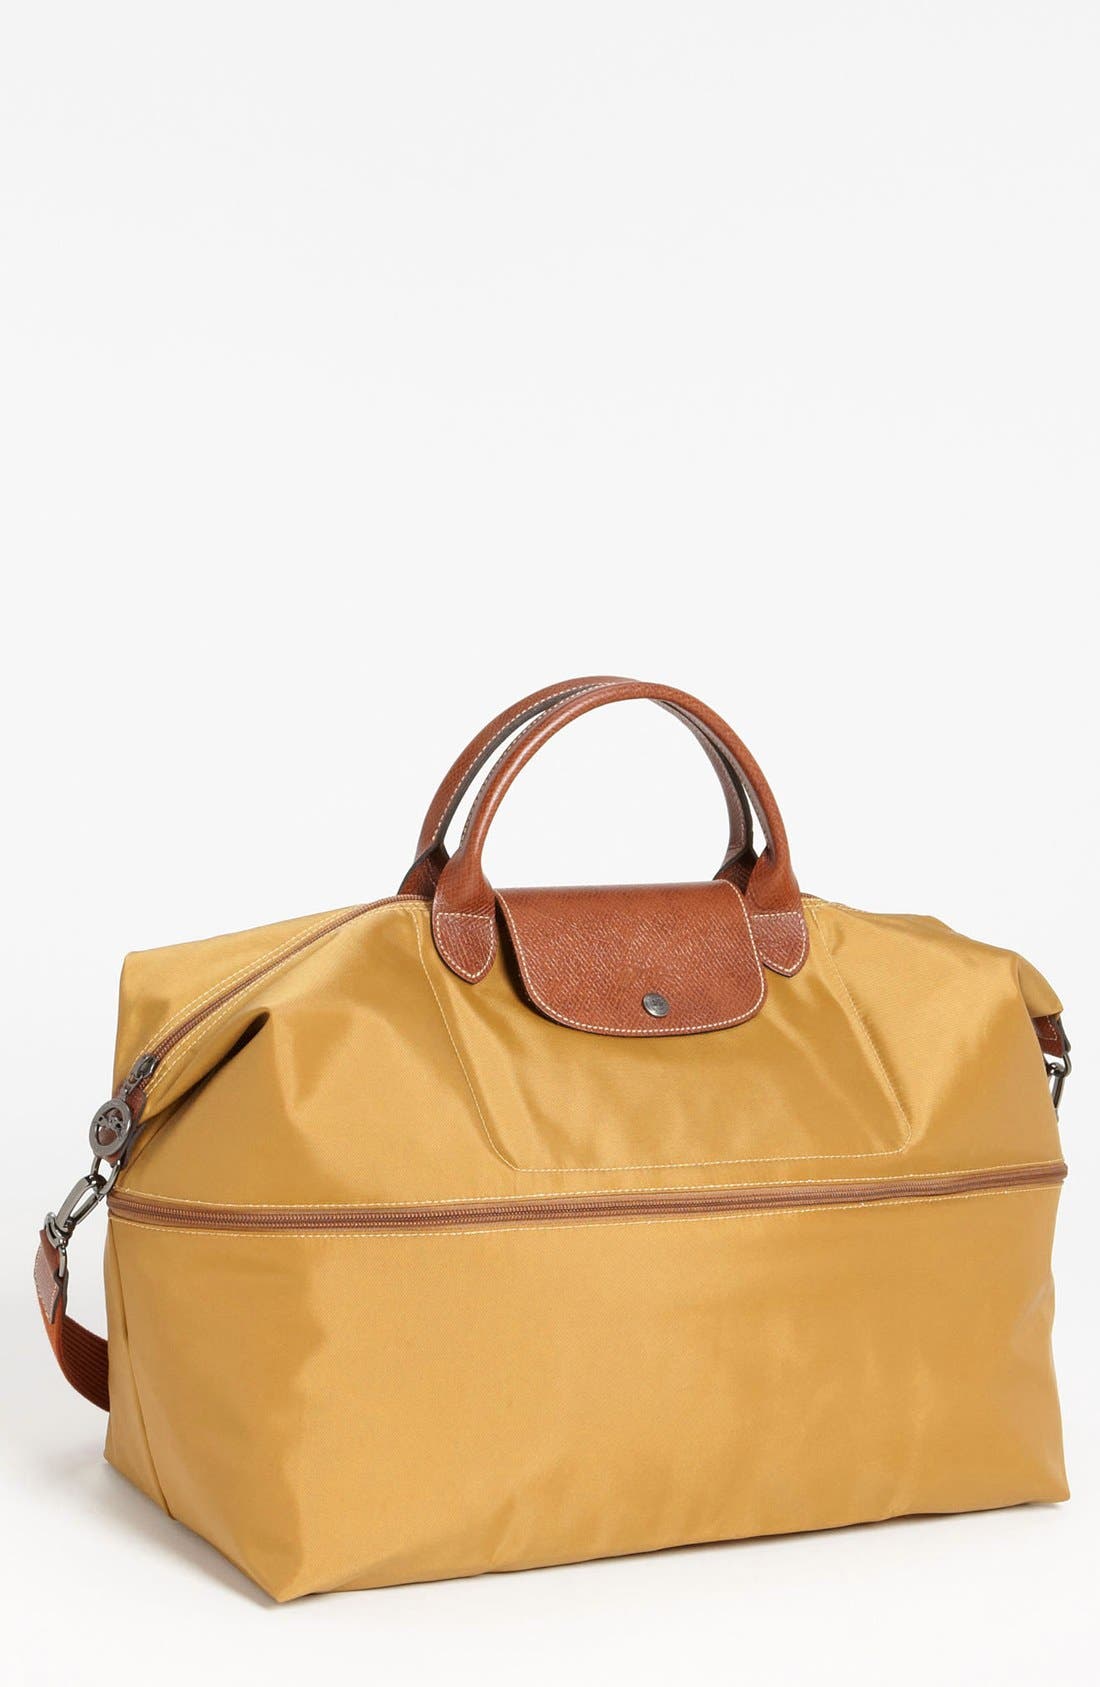 longchamp le pliage travel bag with strap